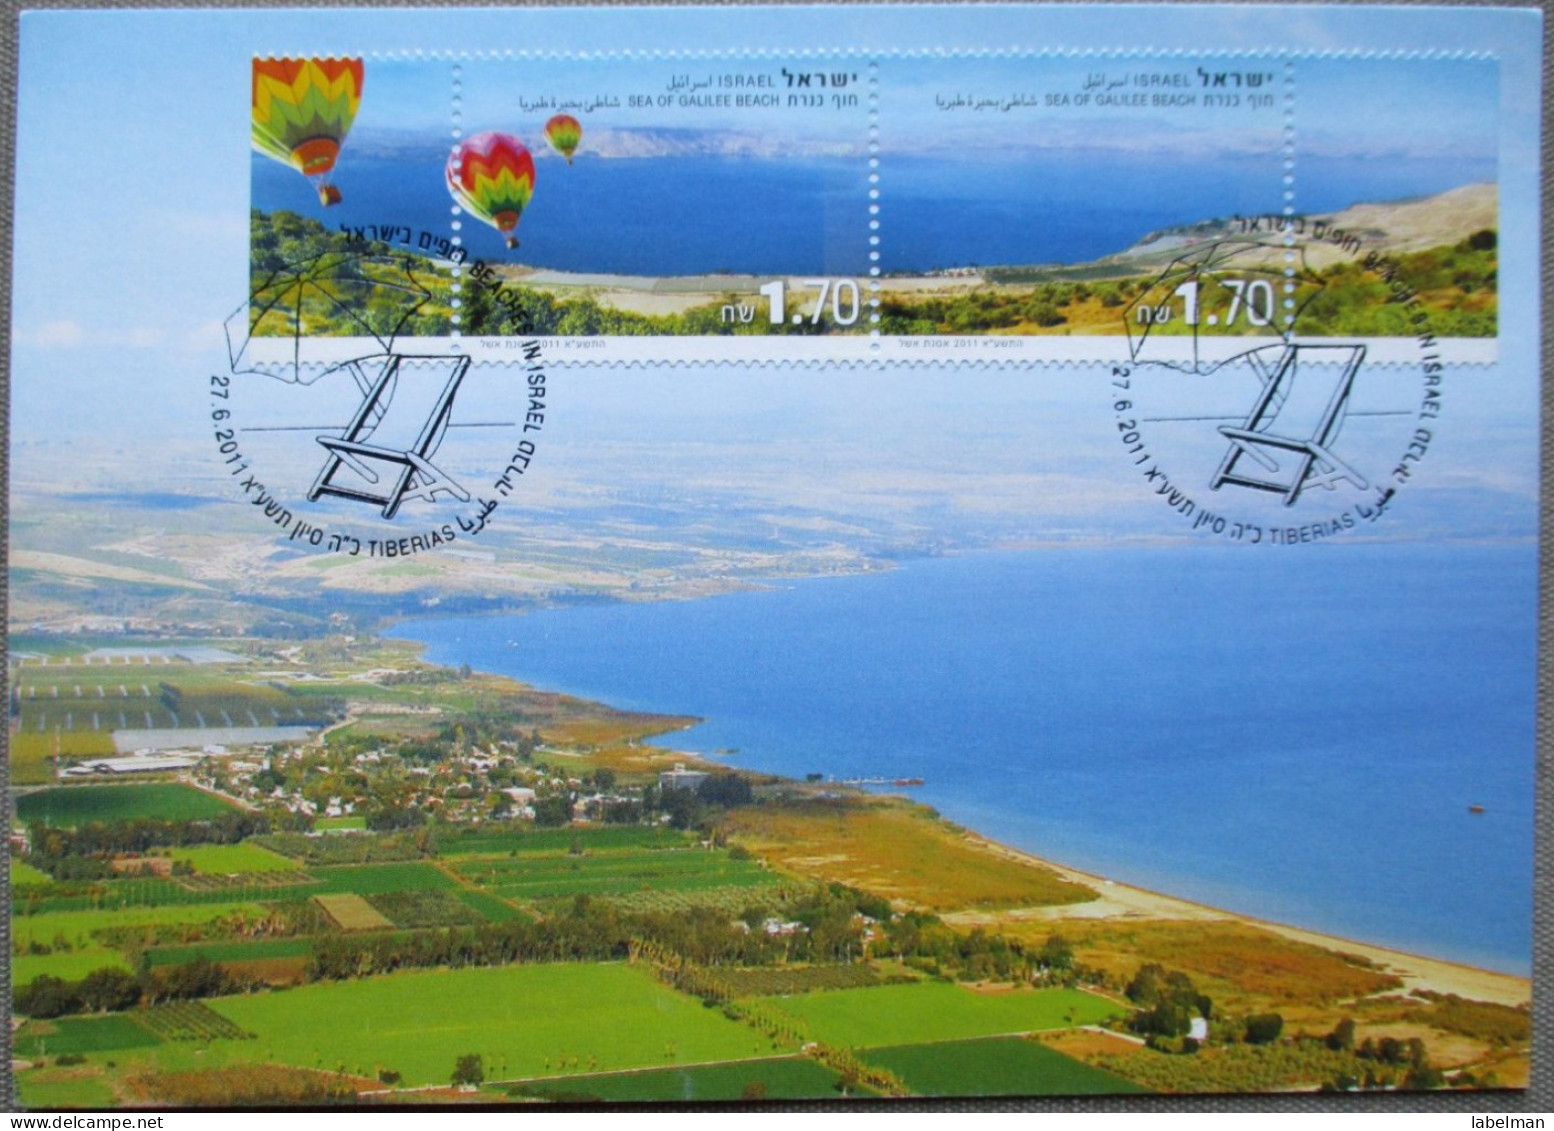 ISRAEL 2011 MAXIMUM CARD POSTCARD TIBERIAS GALILEE SEA FIRST DAY OF ISSUE CARTOLINA CARTE POSTALE POSTKARTE CARTOLINA - Cartes-maximum